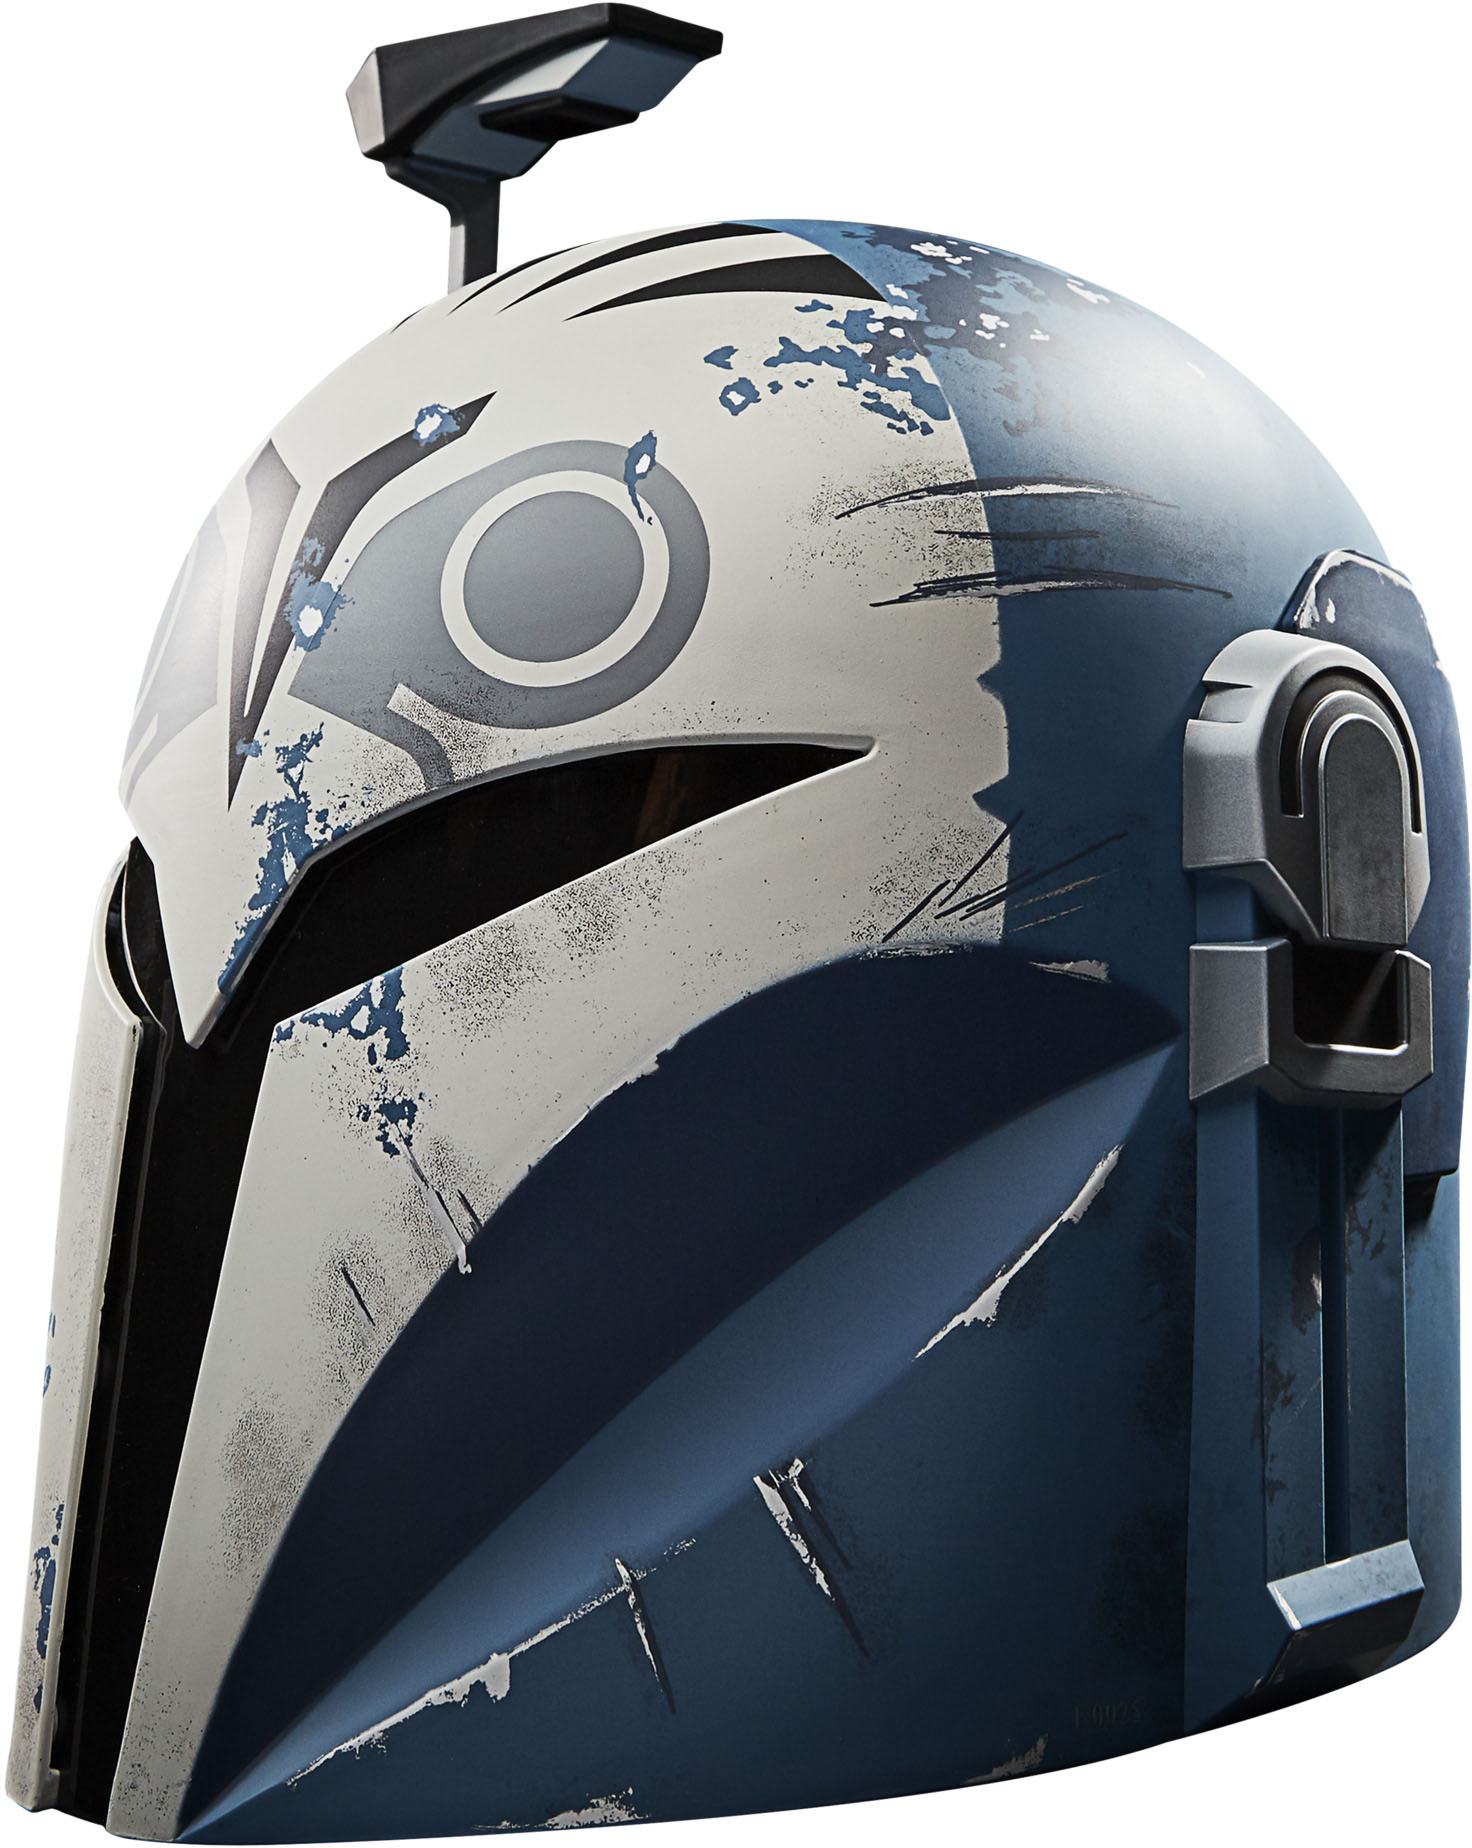 Angle View: Star Wars - The Black Series Bo-Katan Kryze Premium Electronic Helmet